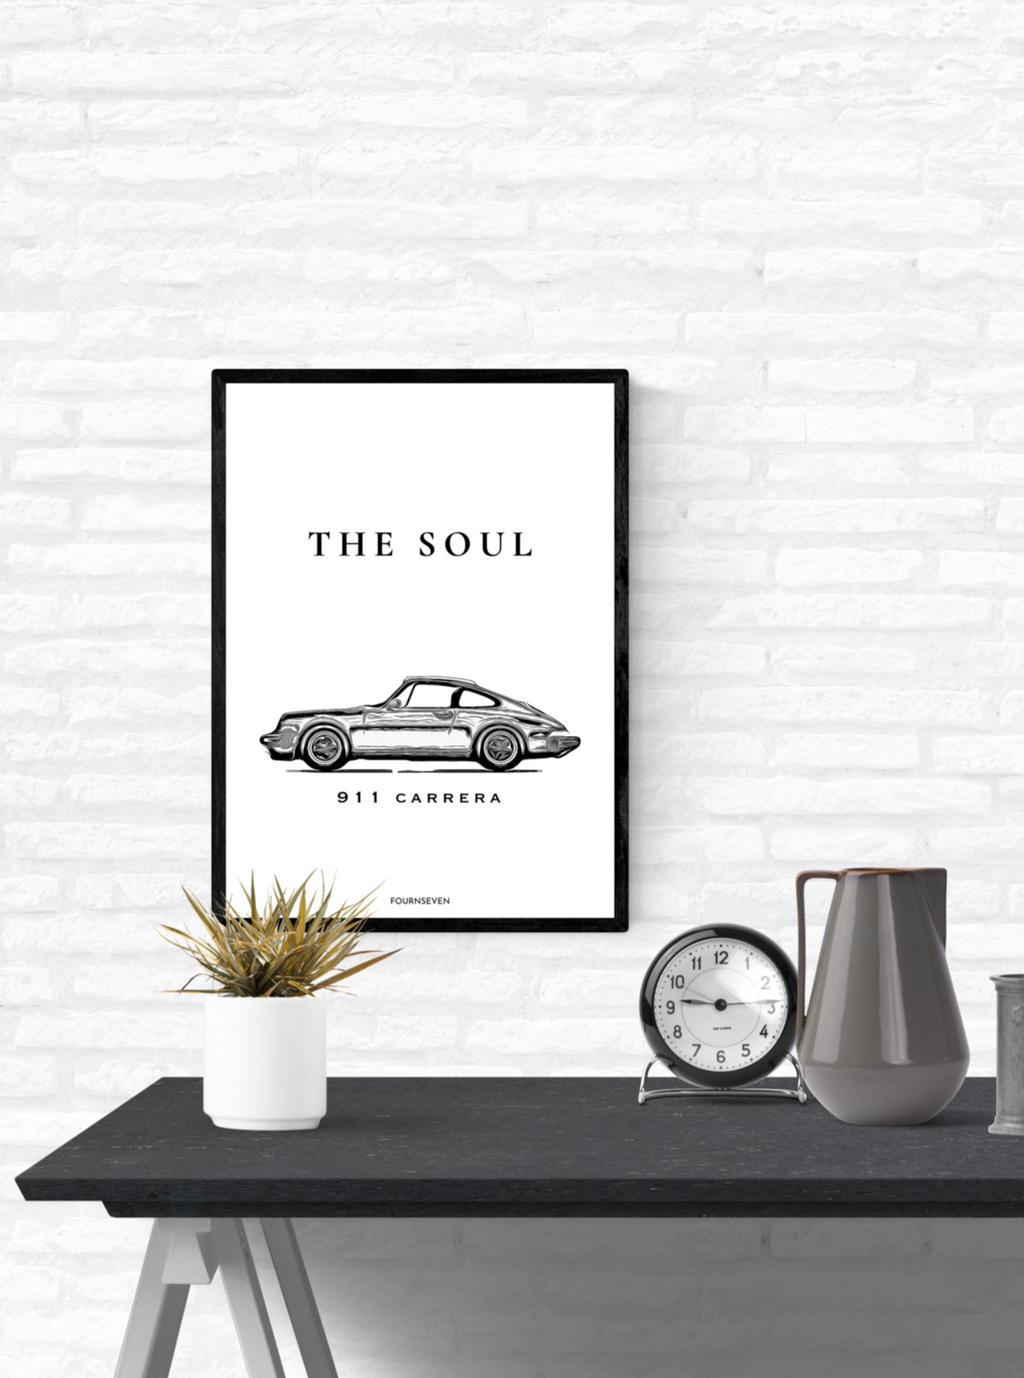 THE SOUL. Vintage Porsche 911 Carrera poster.